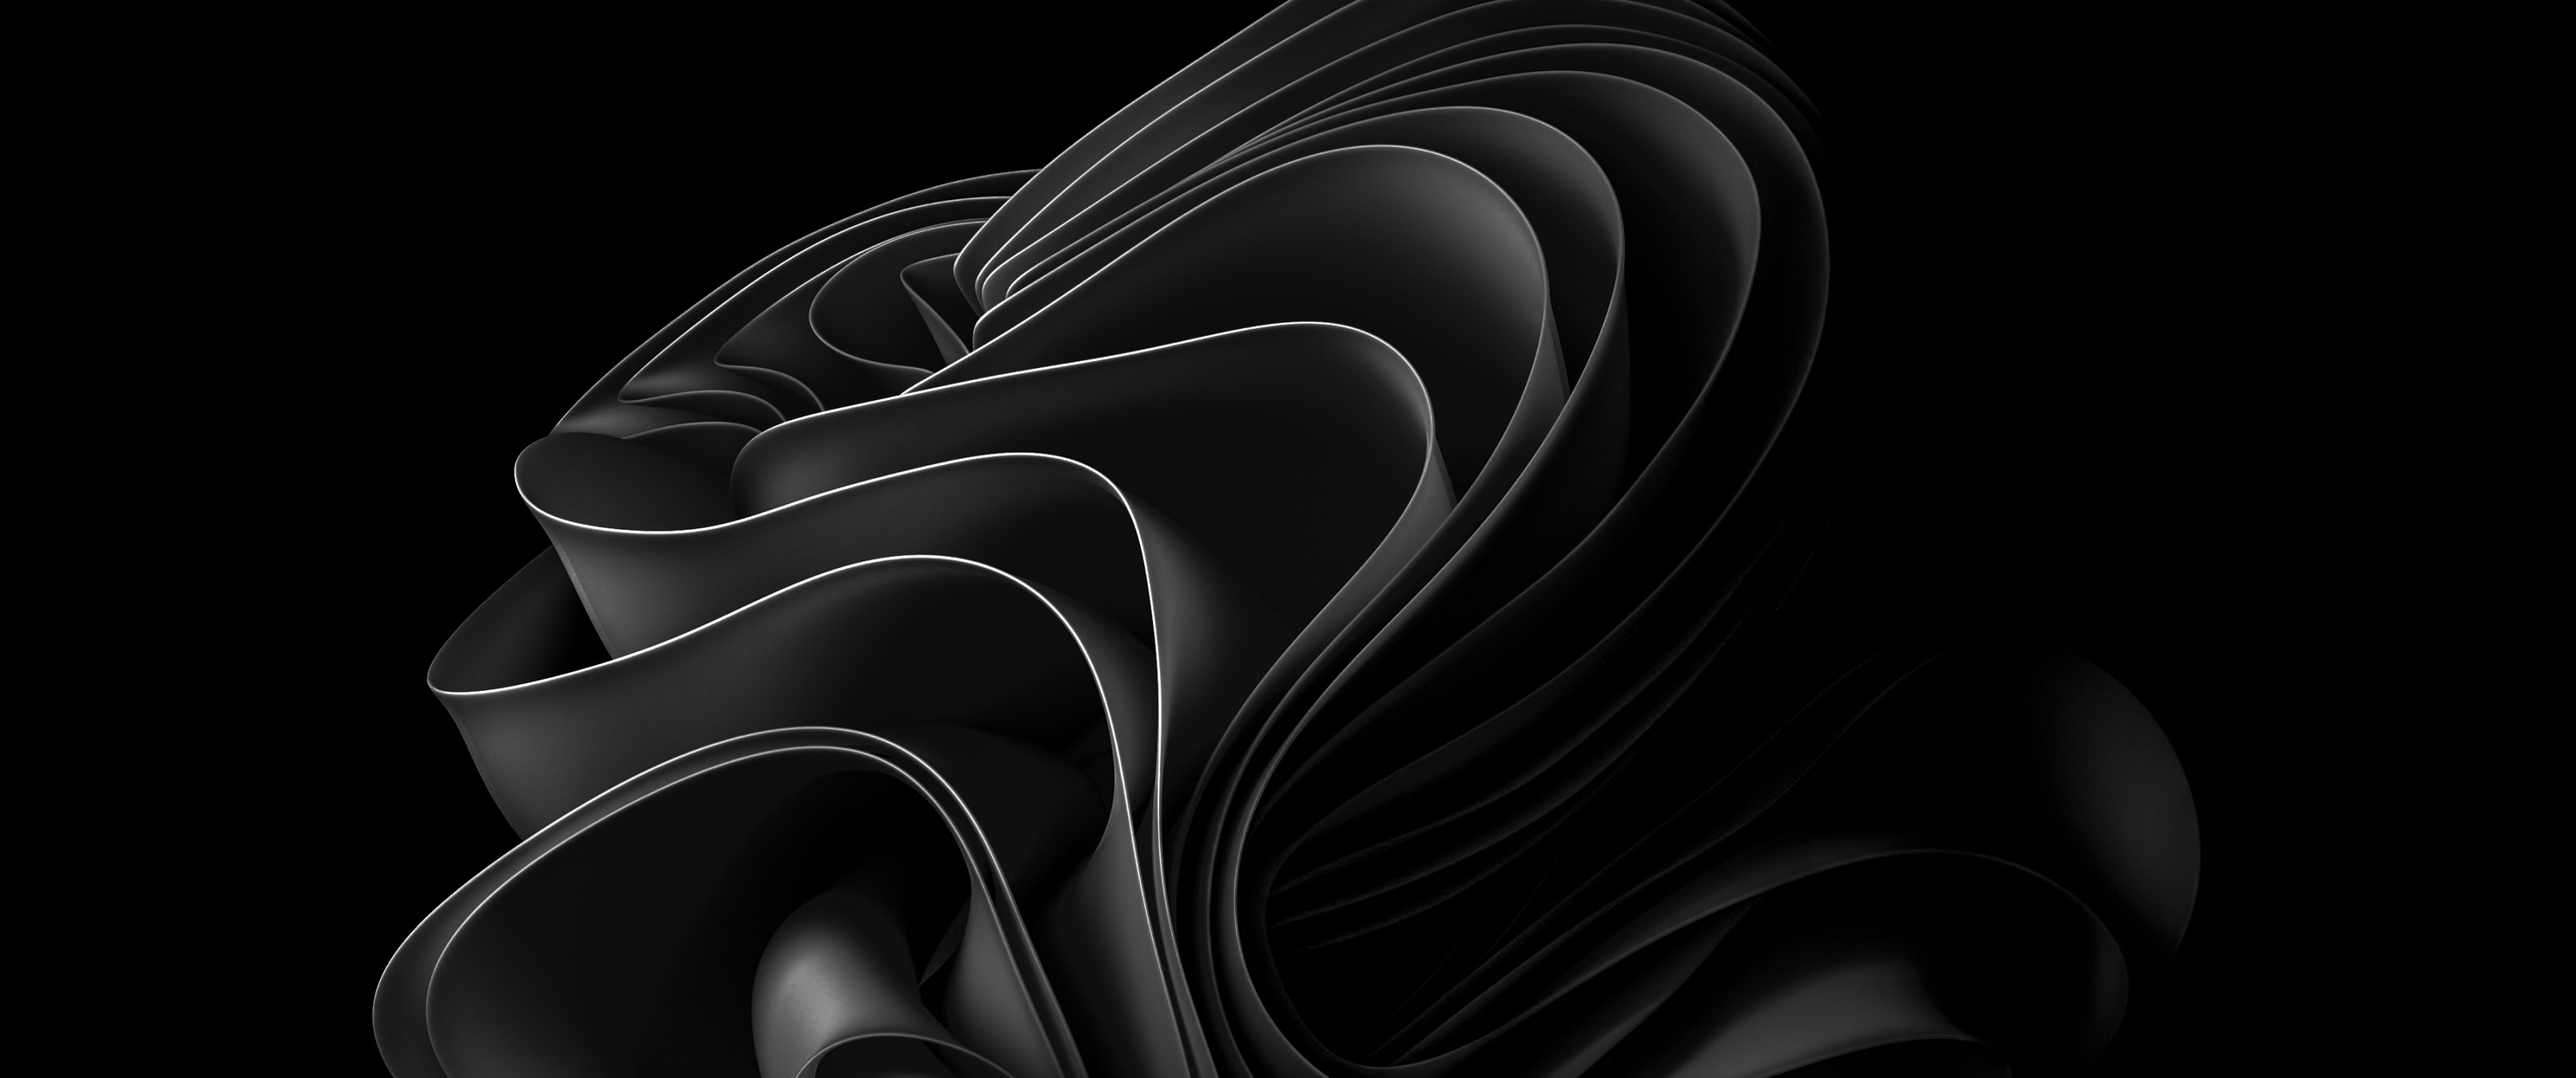 Windows 11 Wallpaper 4K, Stock, Black abstract, #8971